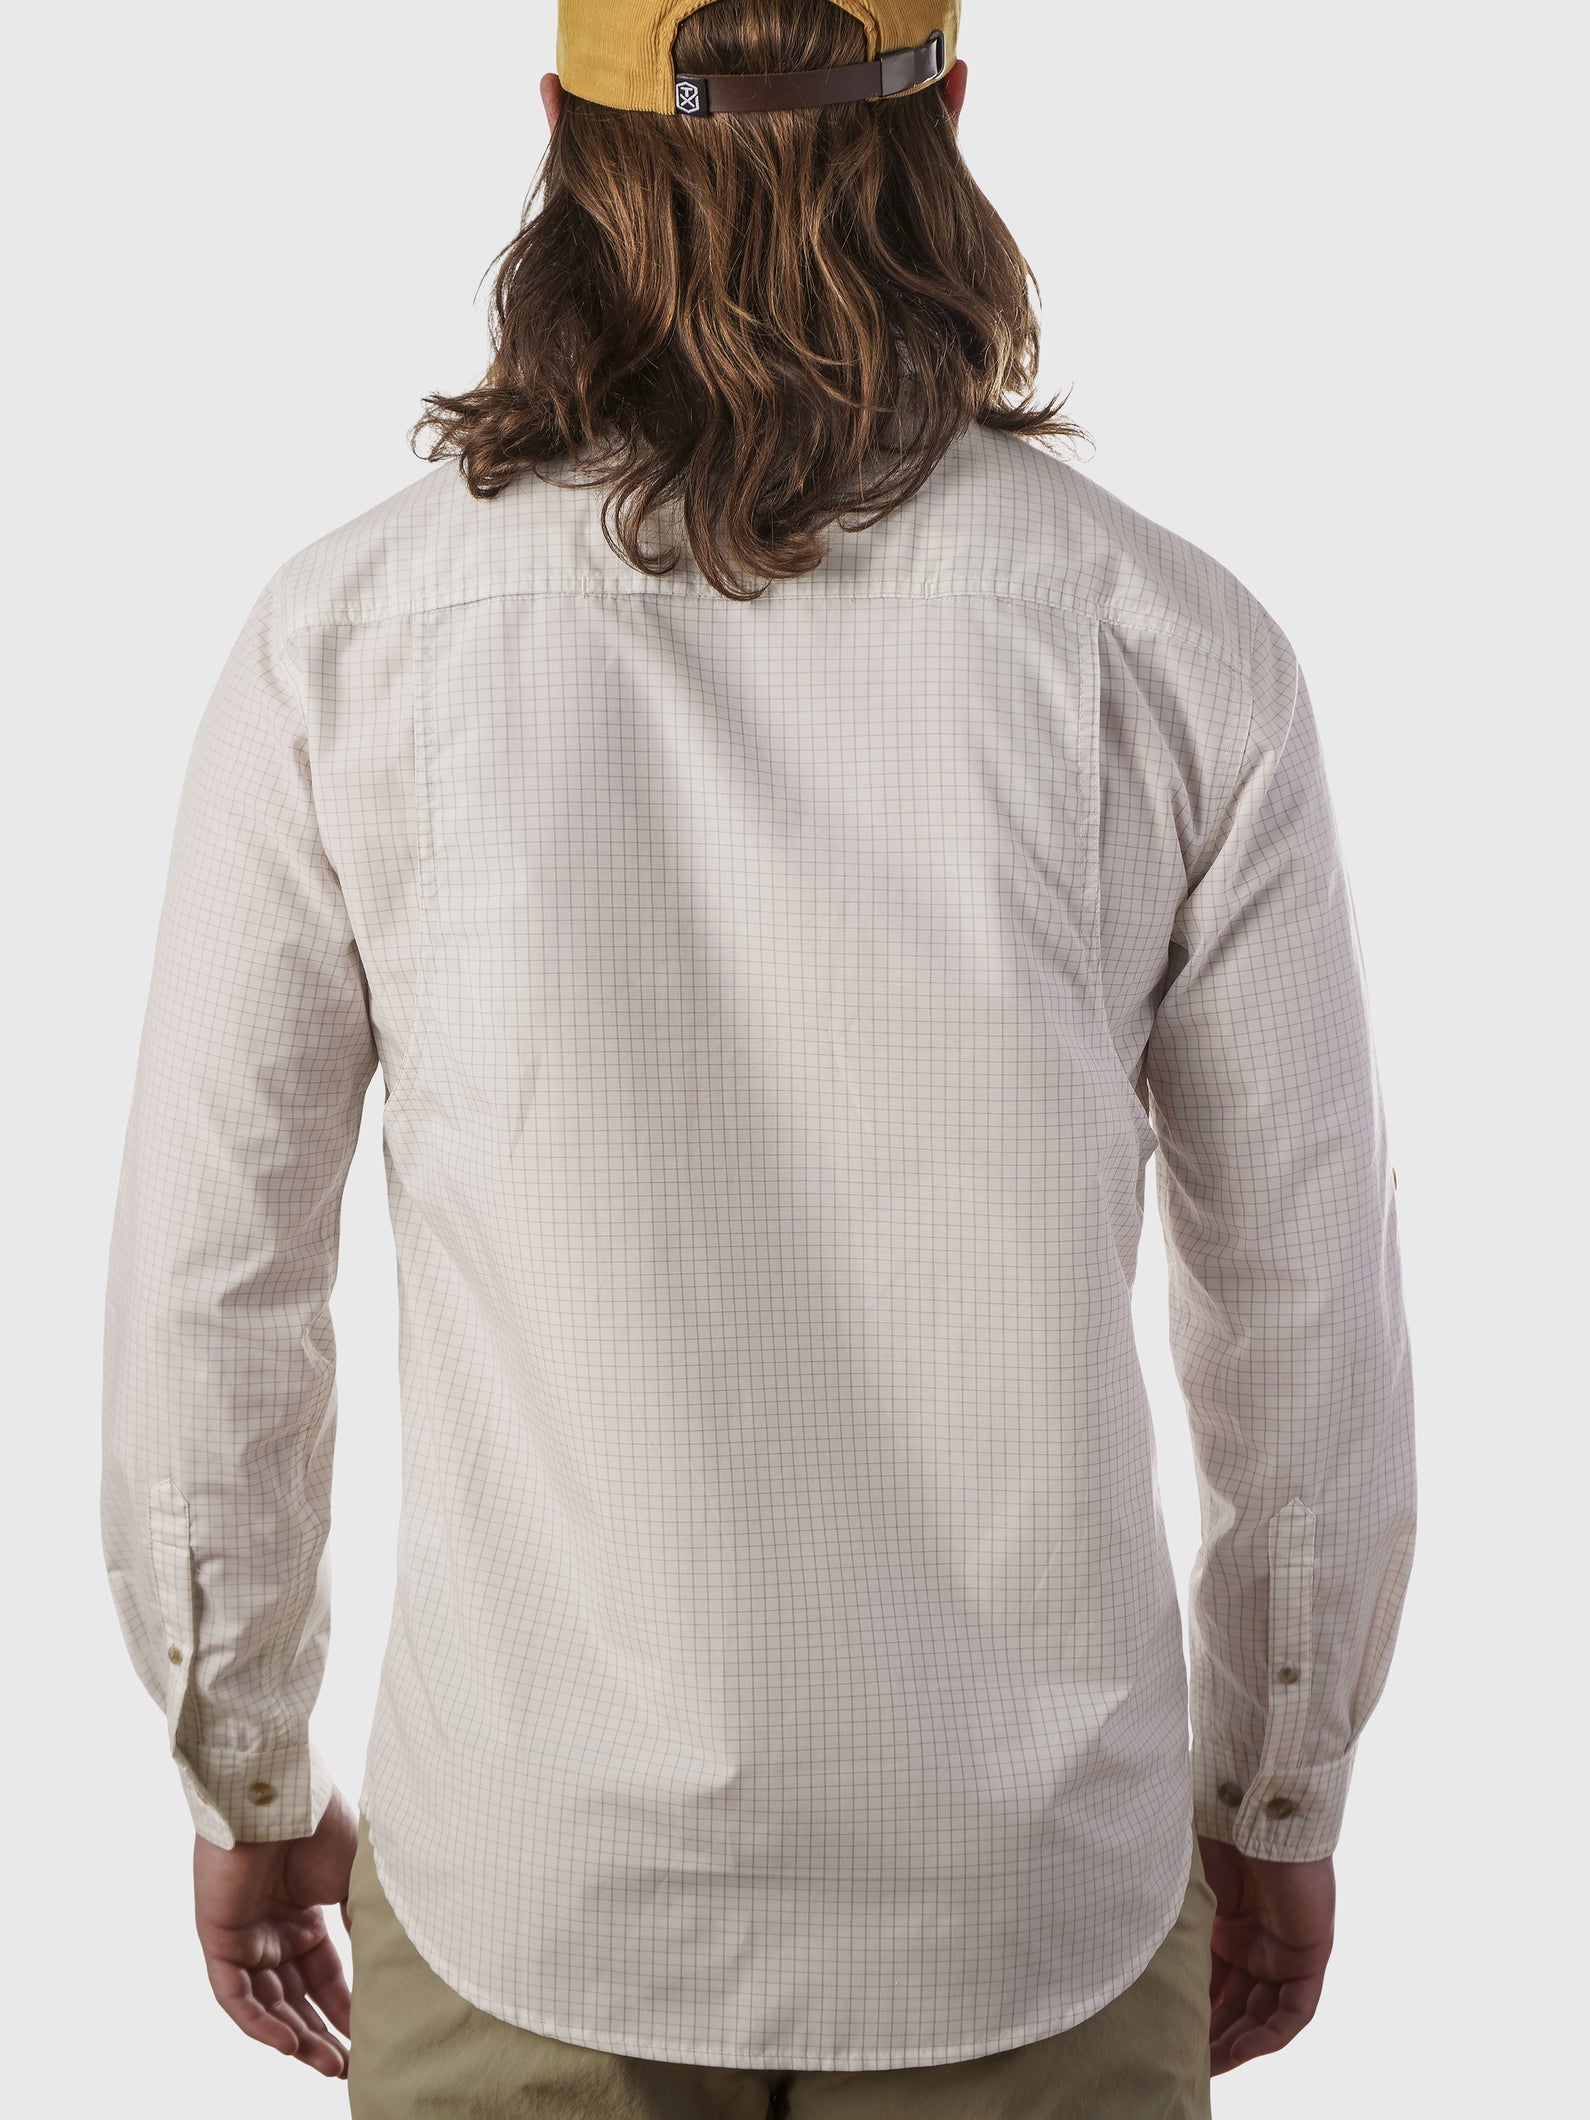 Helm Shirt Long Sleeve - White Oyster Grid